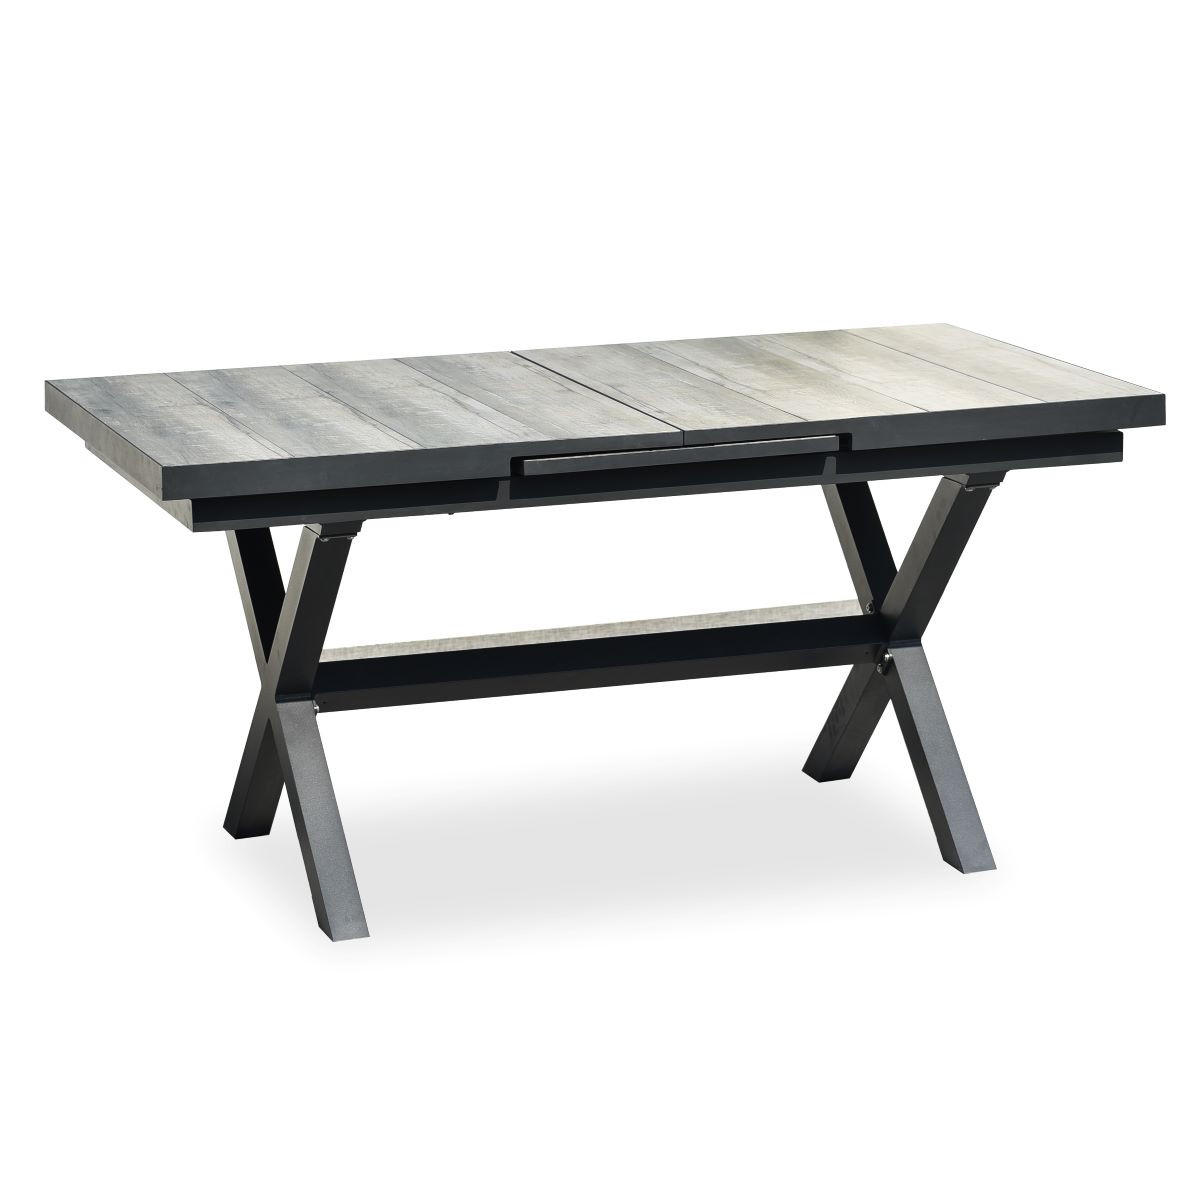 Læsø havebord i aluminium og keramik med udtræk - grå